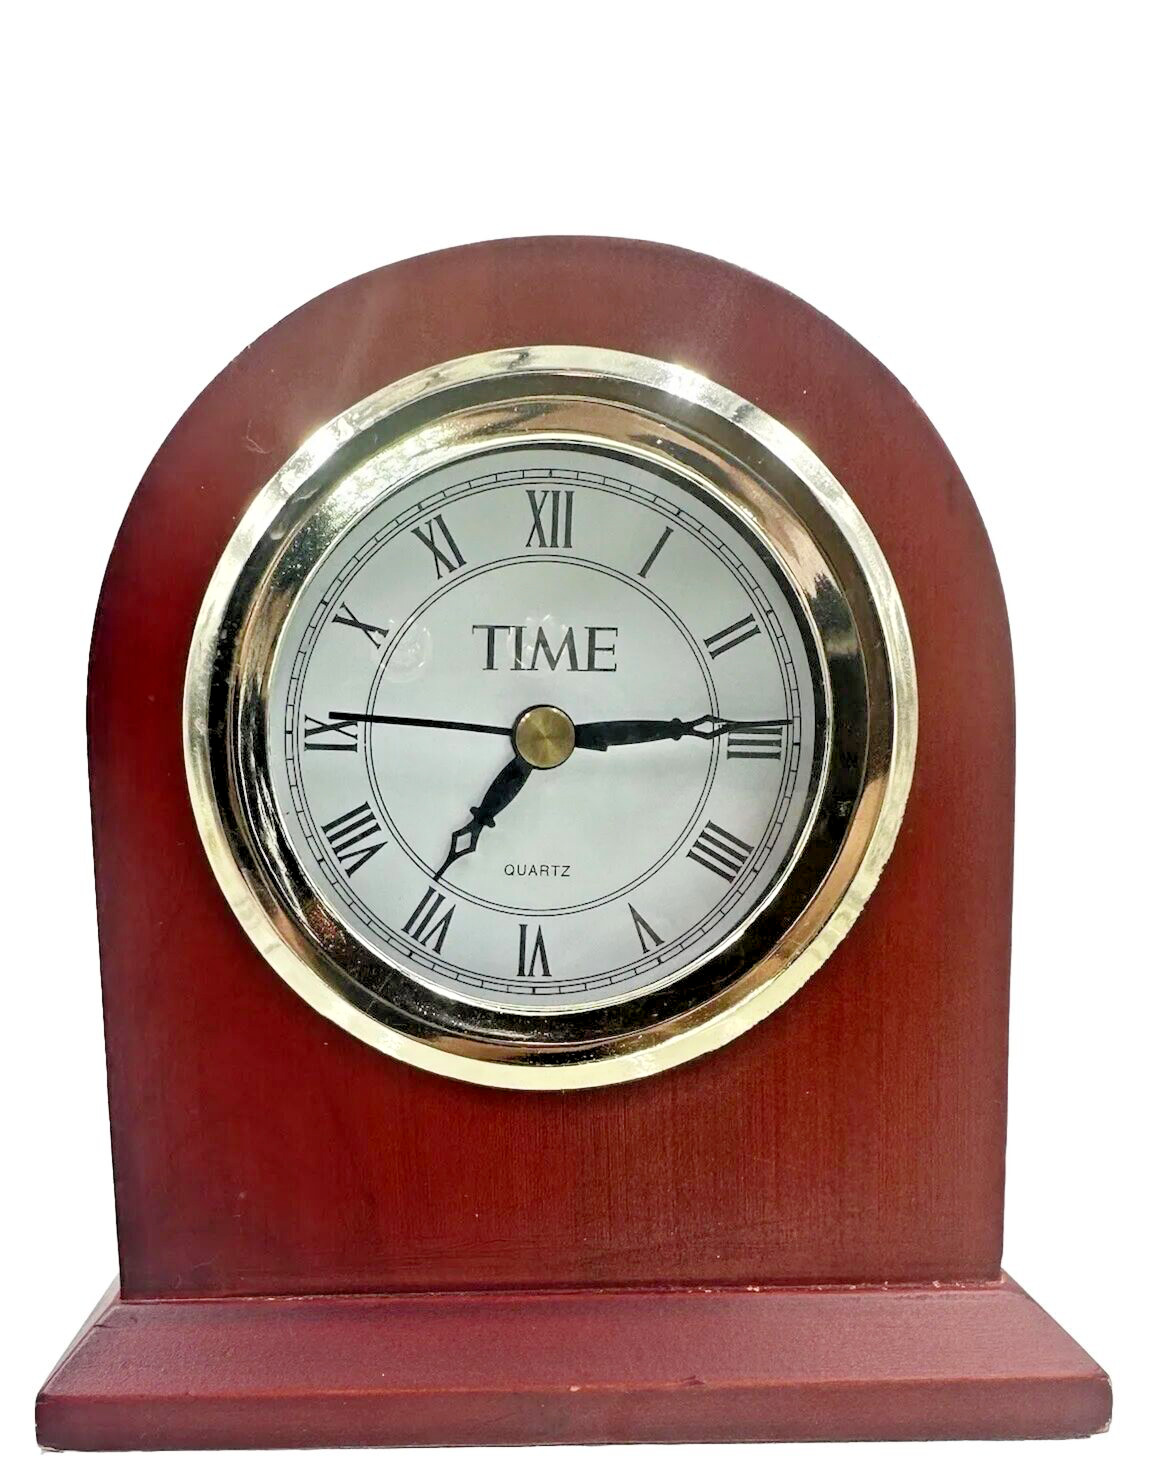 Time Magazine Wood Desktop Mantle Quartz Clock Goldtone Trim Quartz Seconds Hand